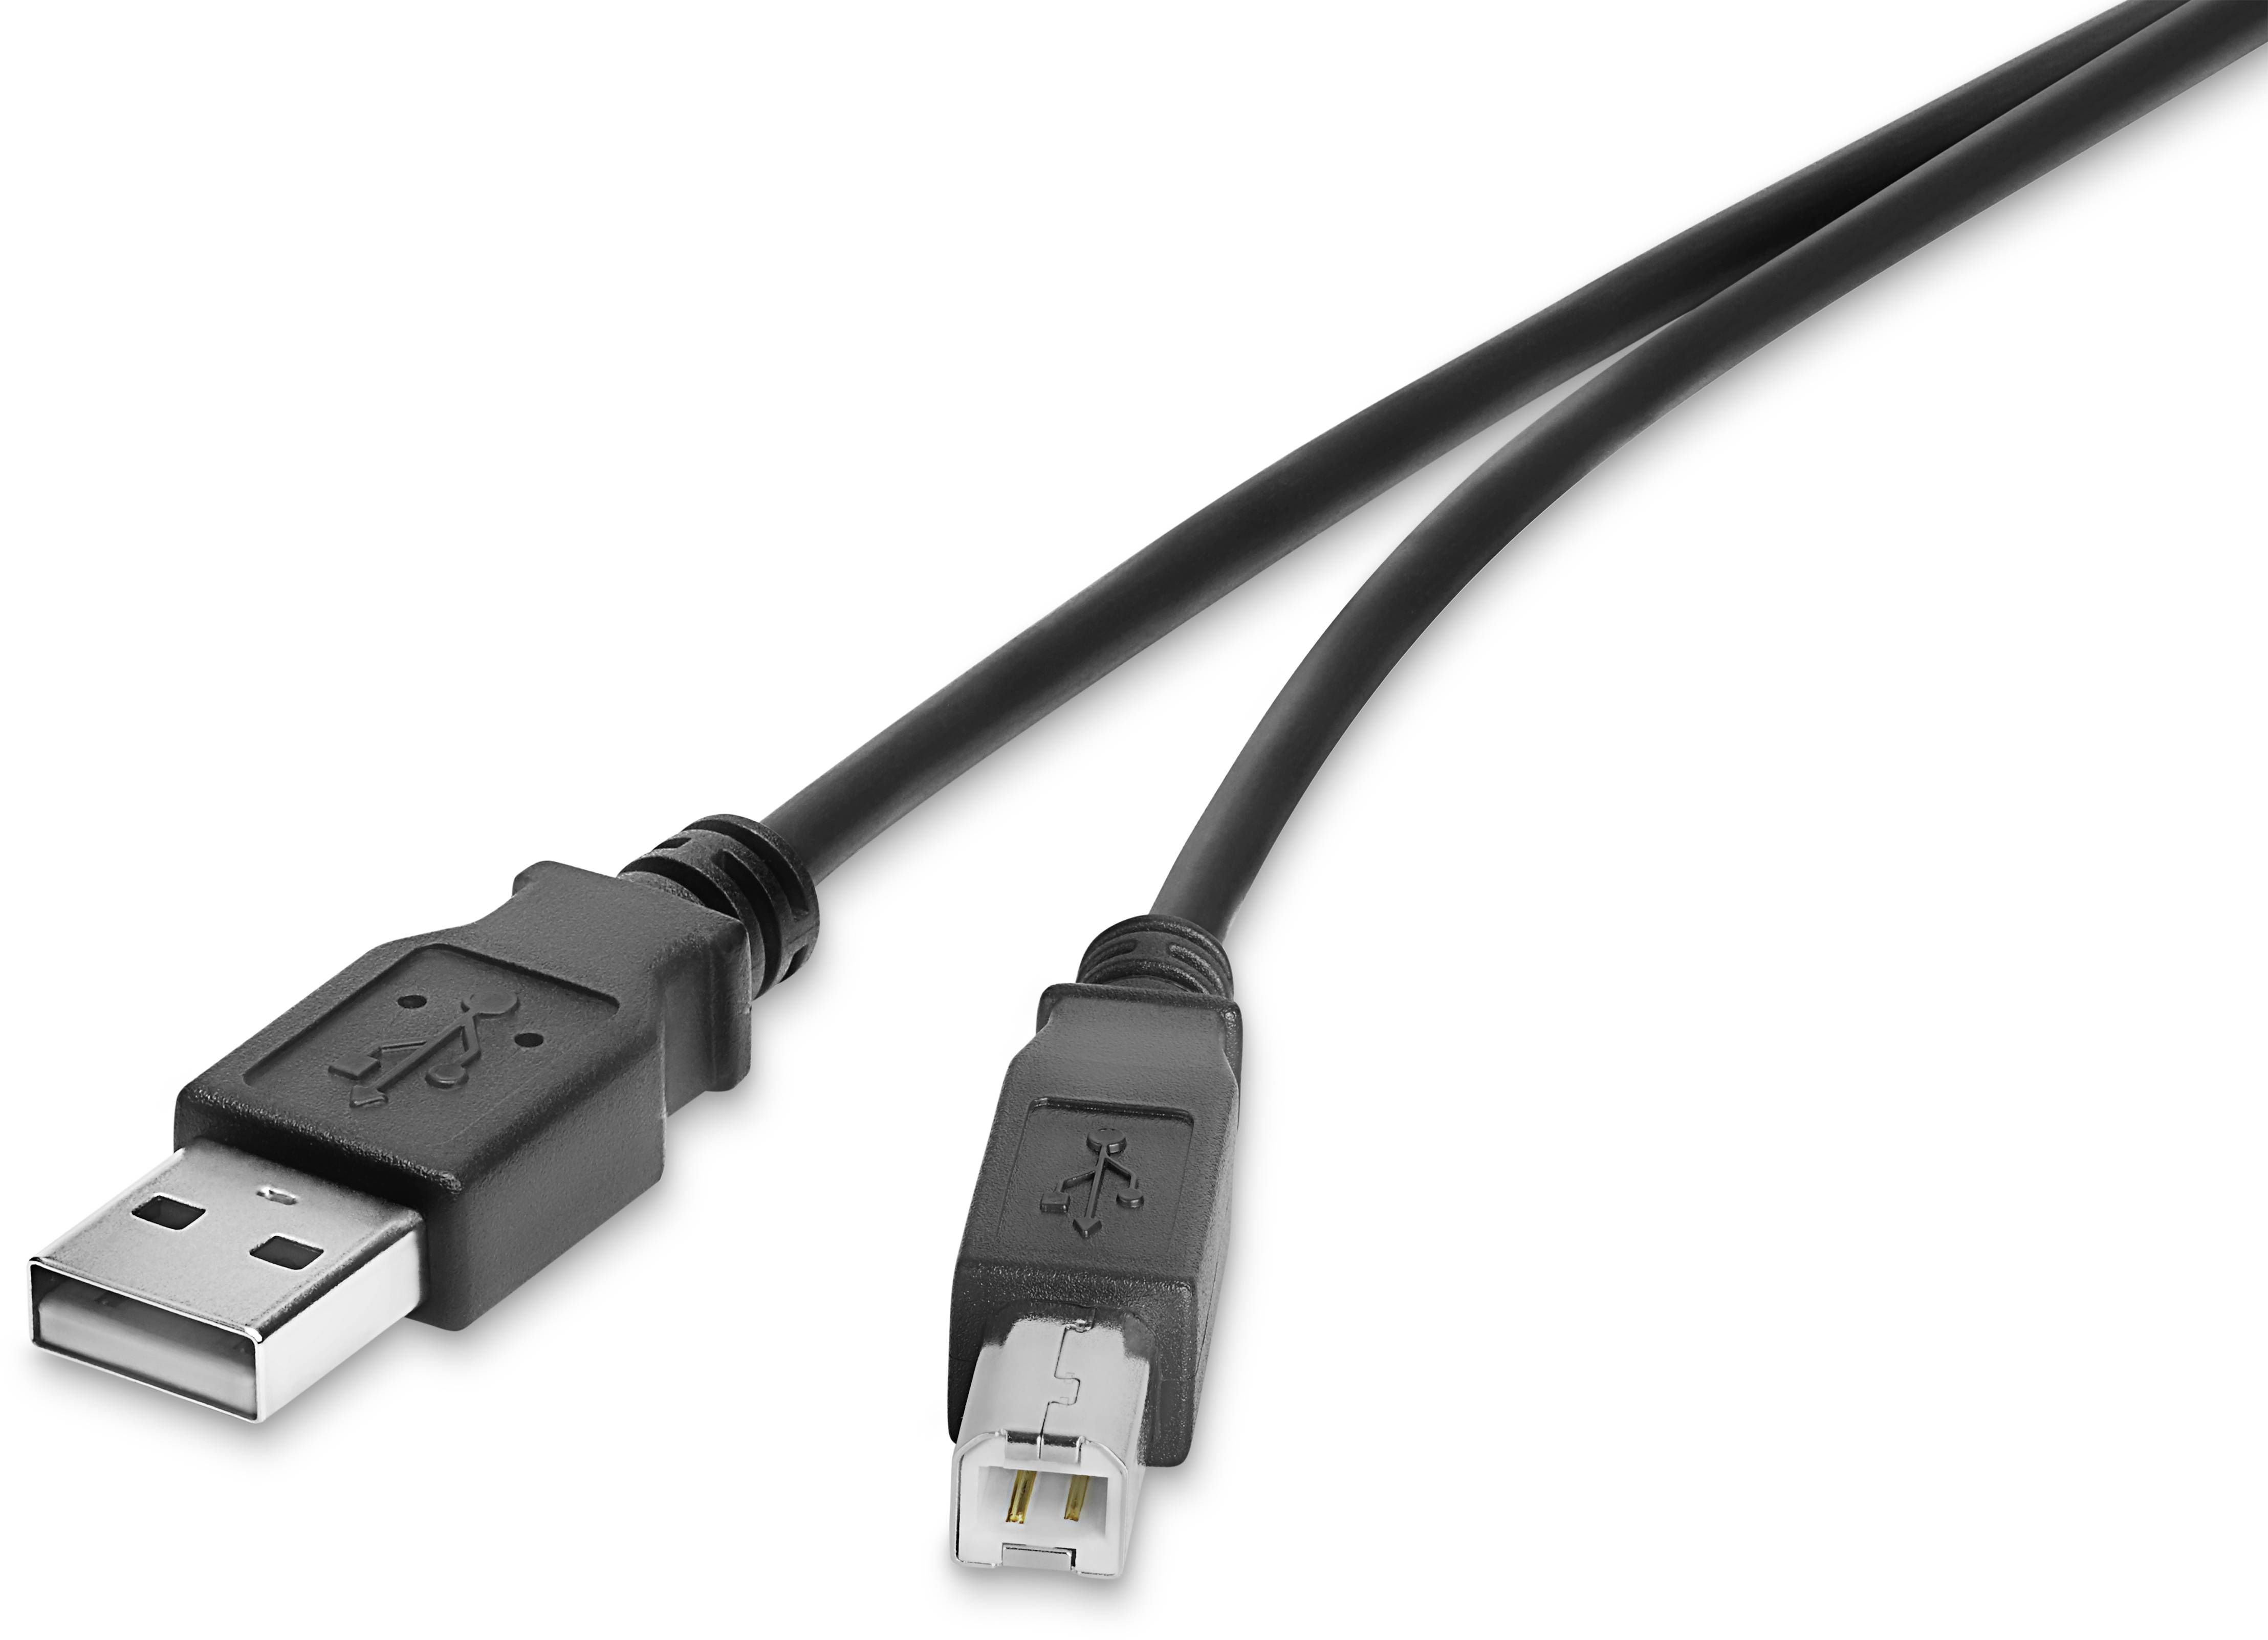 CONRAD Renkforce USB 2.0 Anschlusskabel [1x USB 2.0 Stecker A - 1x USB 2.0 Stecker B] 0.3 m Schwarz